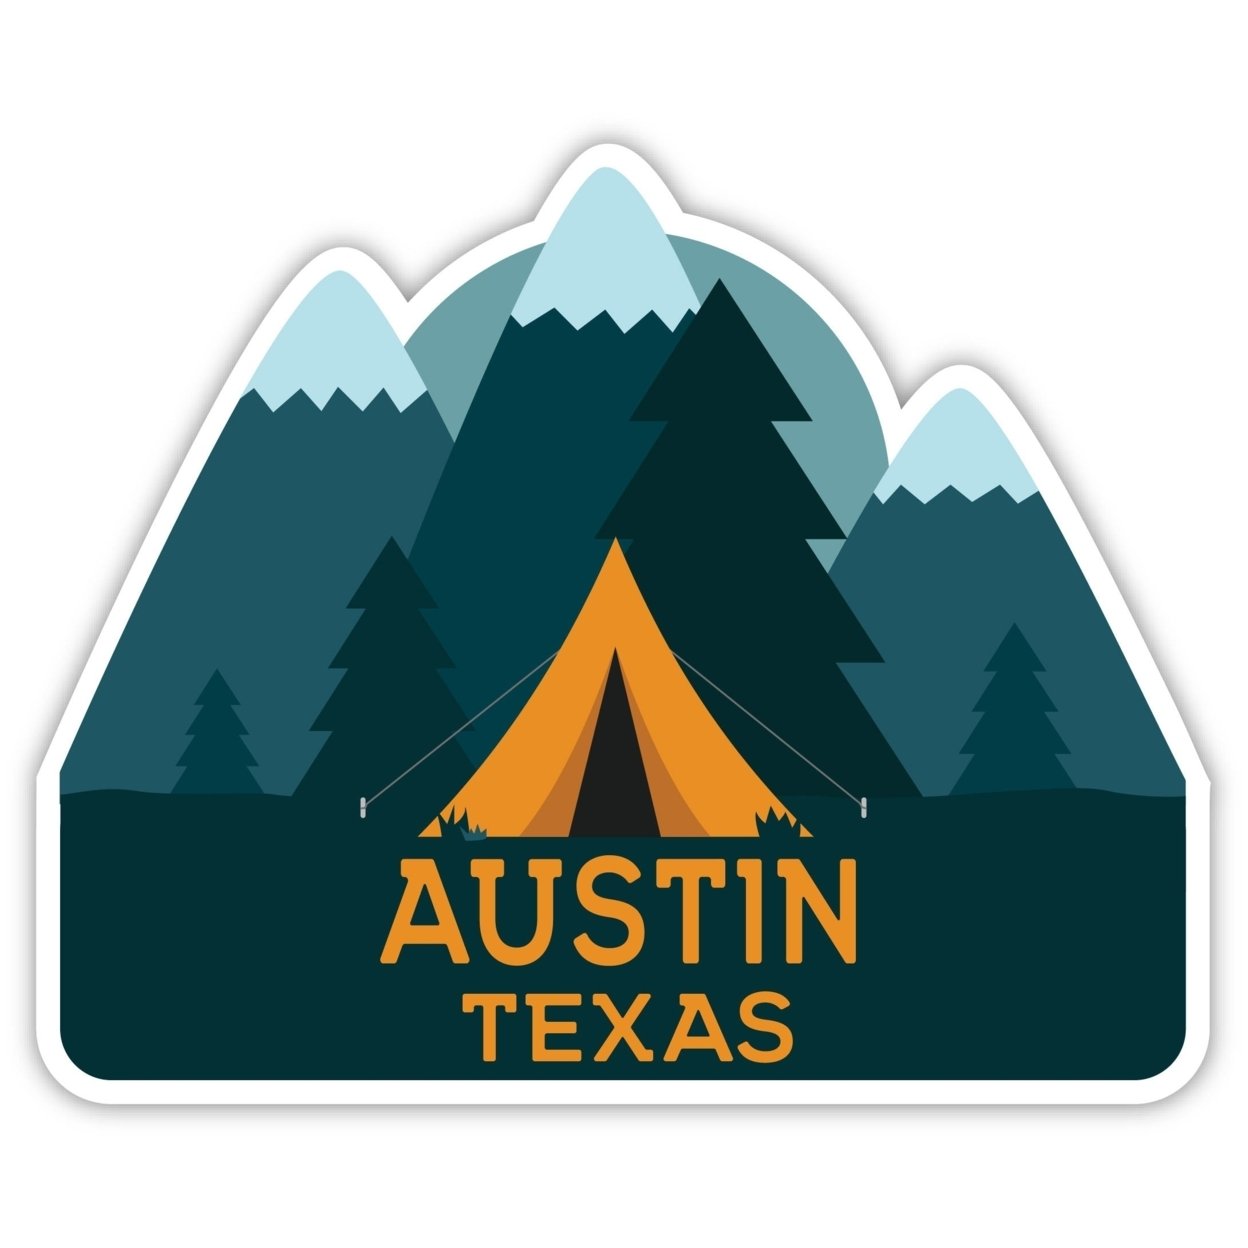 Austin Texas Souvenir Decorative Stickers (Choose Theme And Size) - 4-Pack, 12-Inch, Tent